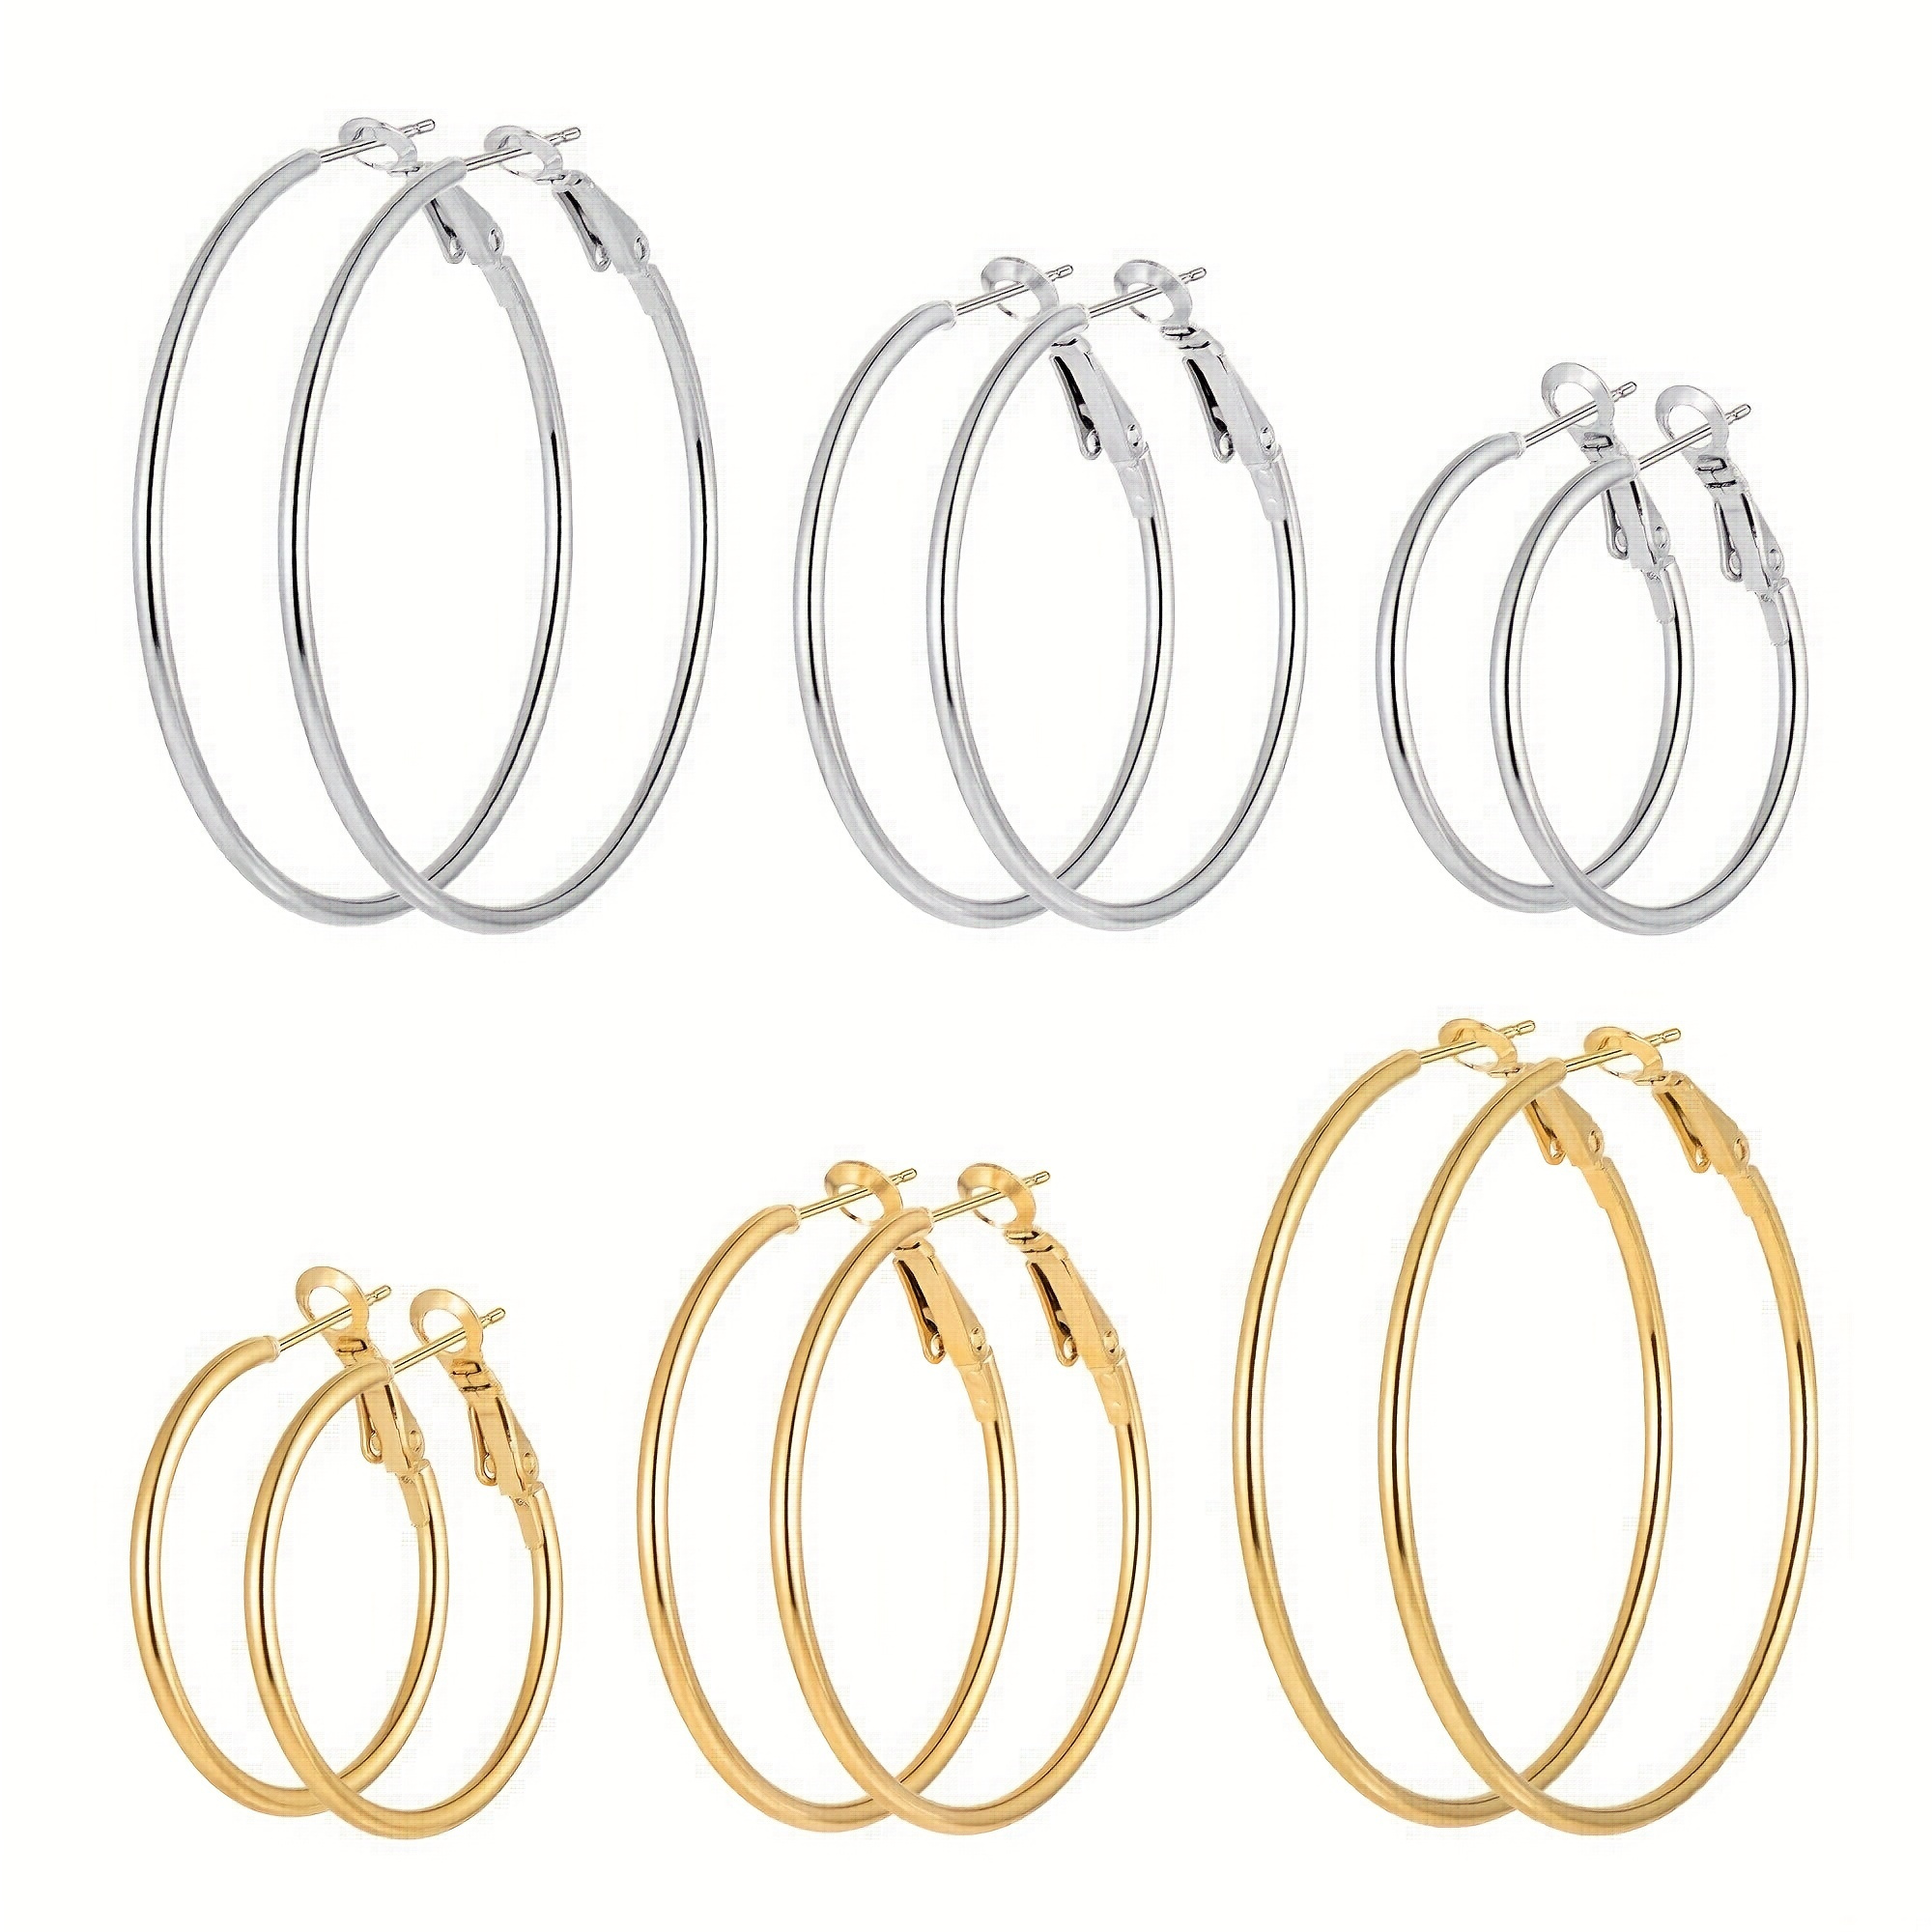  12 Pairs Plastic Earrings for Sensitive Ears, Plastic Post  Earrings for Women, Birthstone Cubic Zirconia Stud Earrings Set 2mm:  Clothing, Shoes & Jewelry